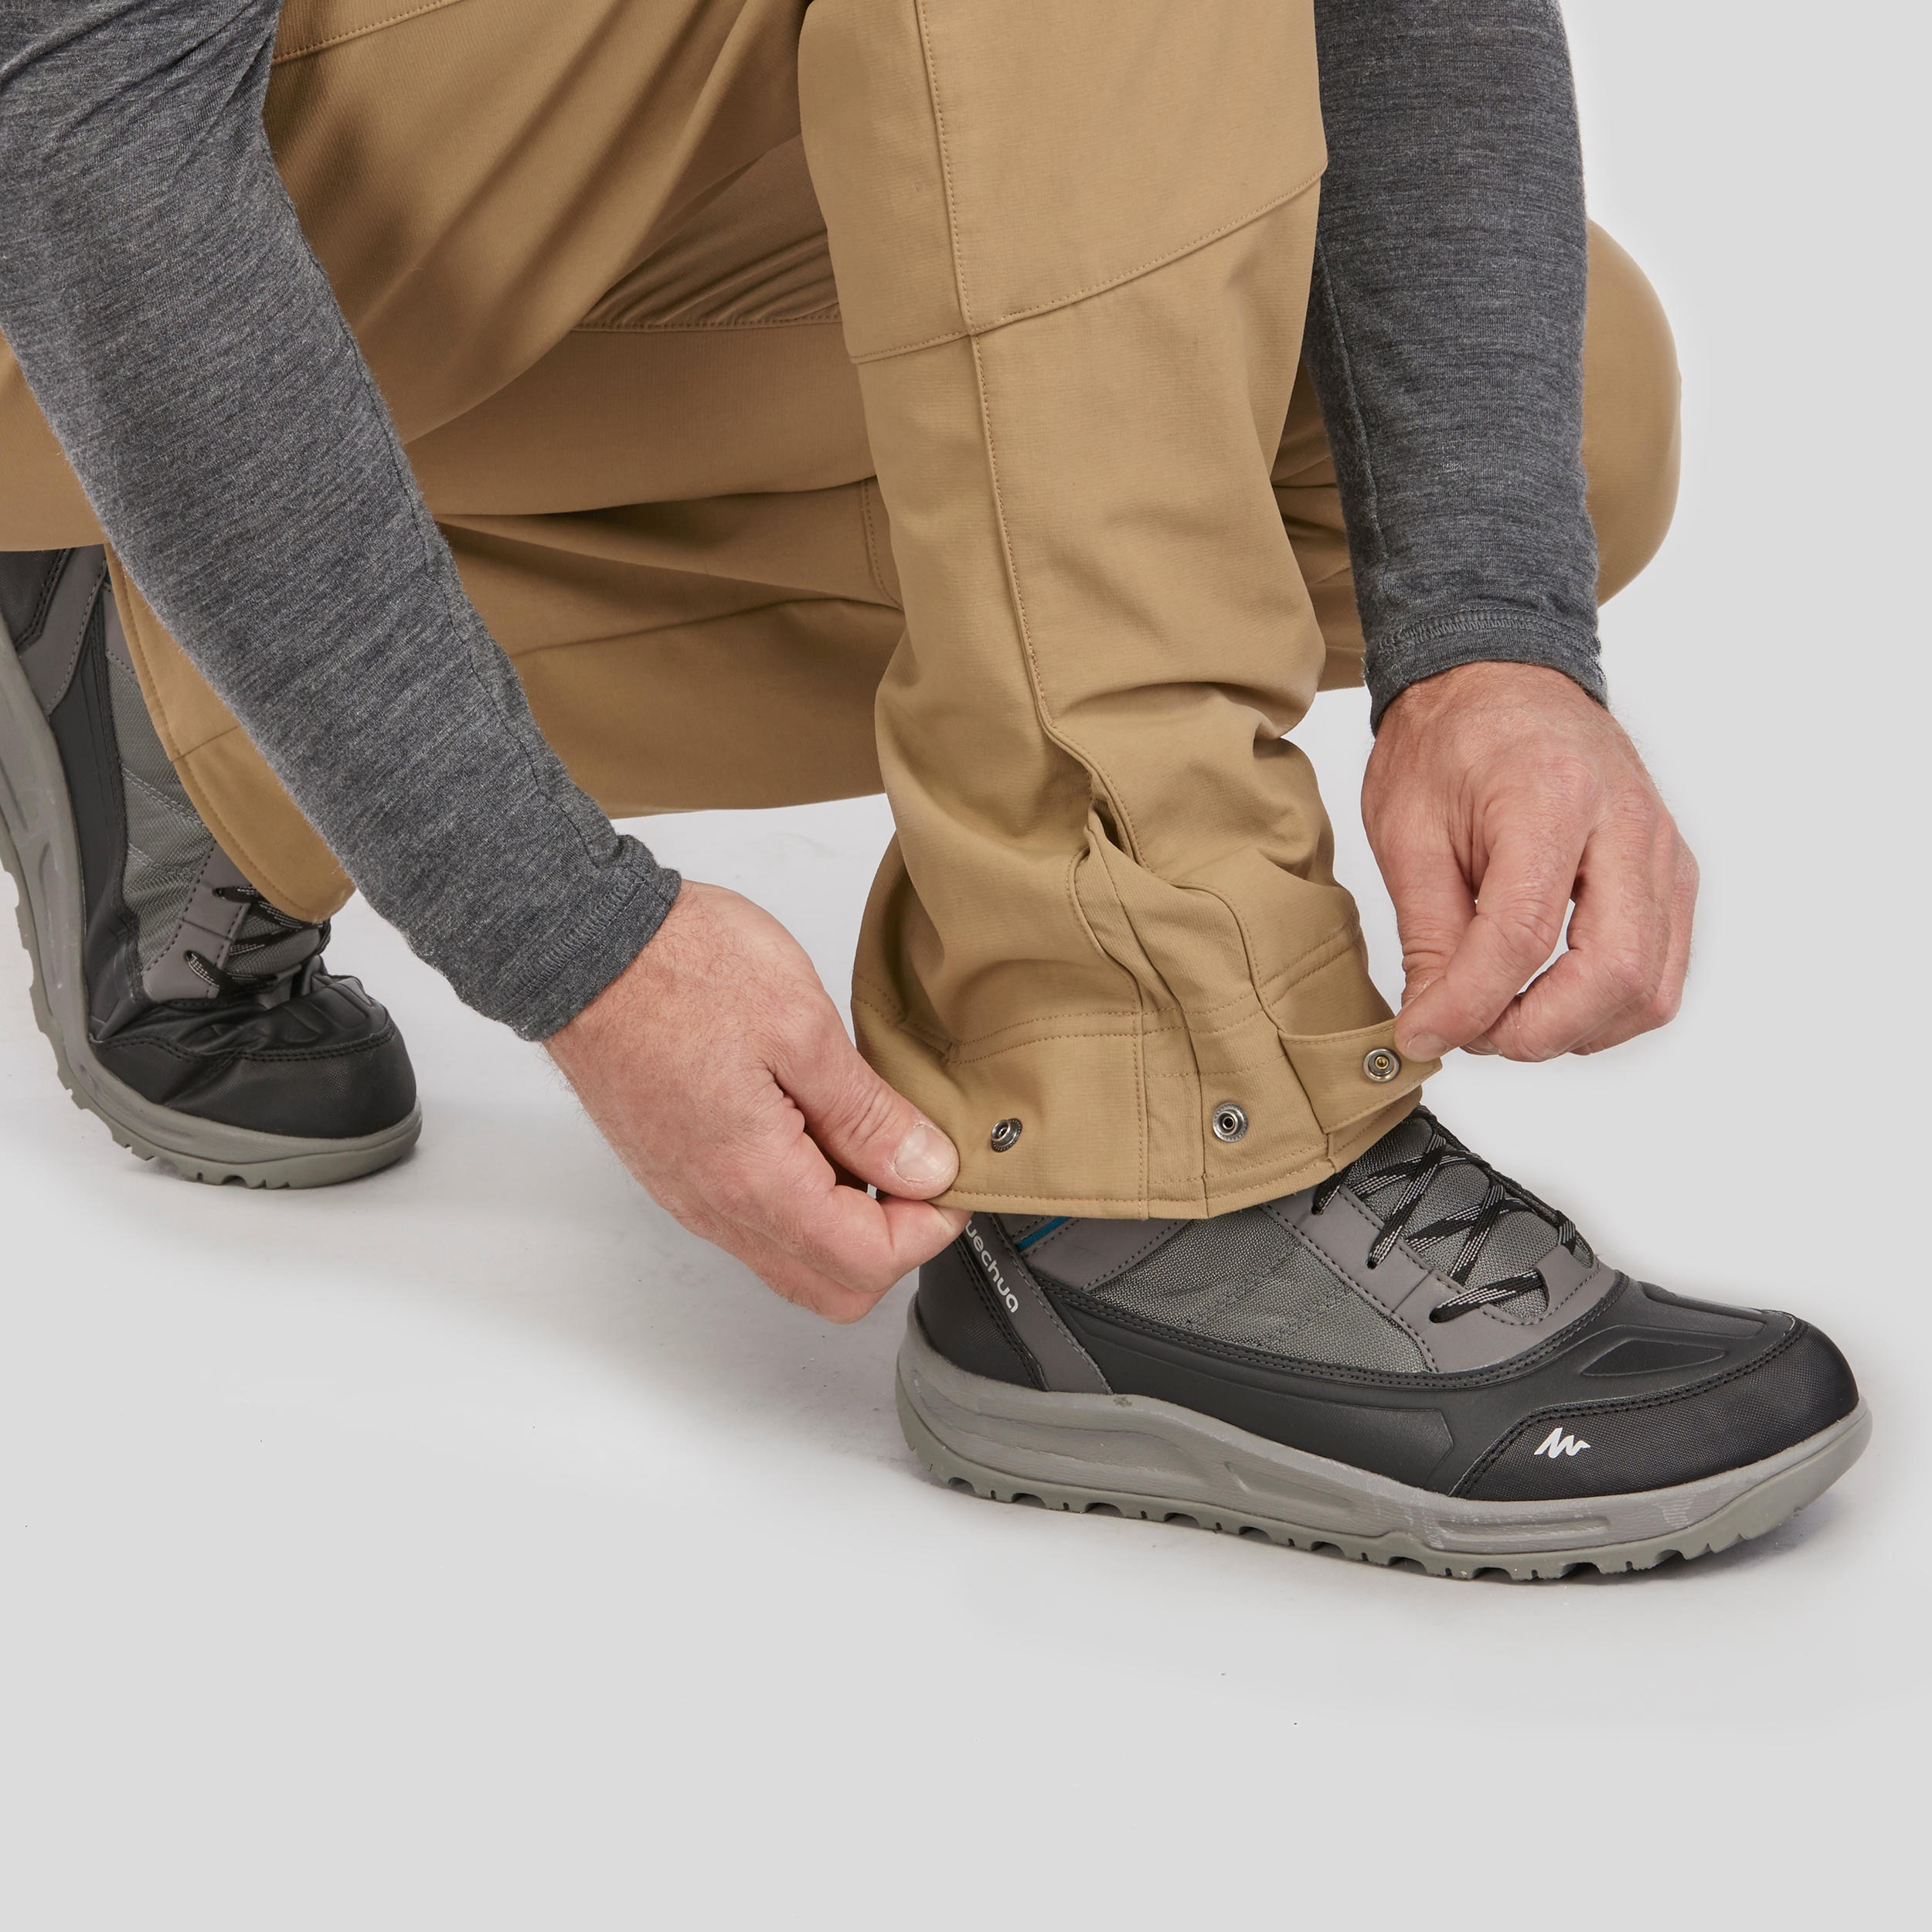 Men's Warm Water-repellent Snow Hiking Trousers - SH900 WARM. - Decathlon